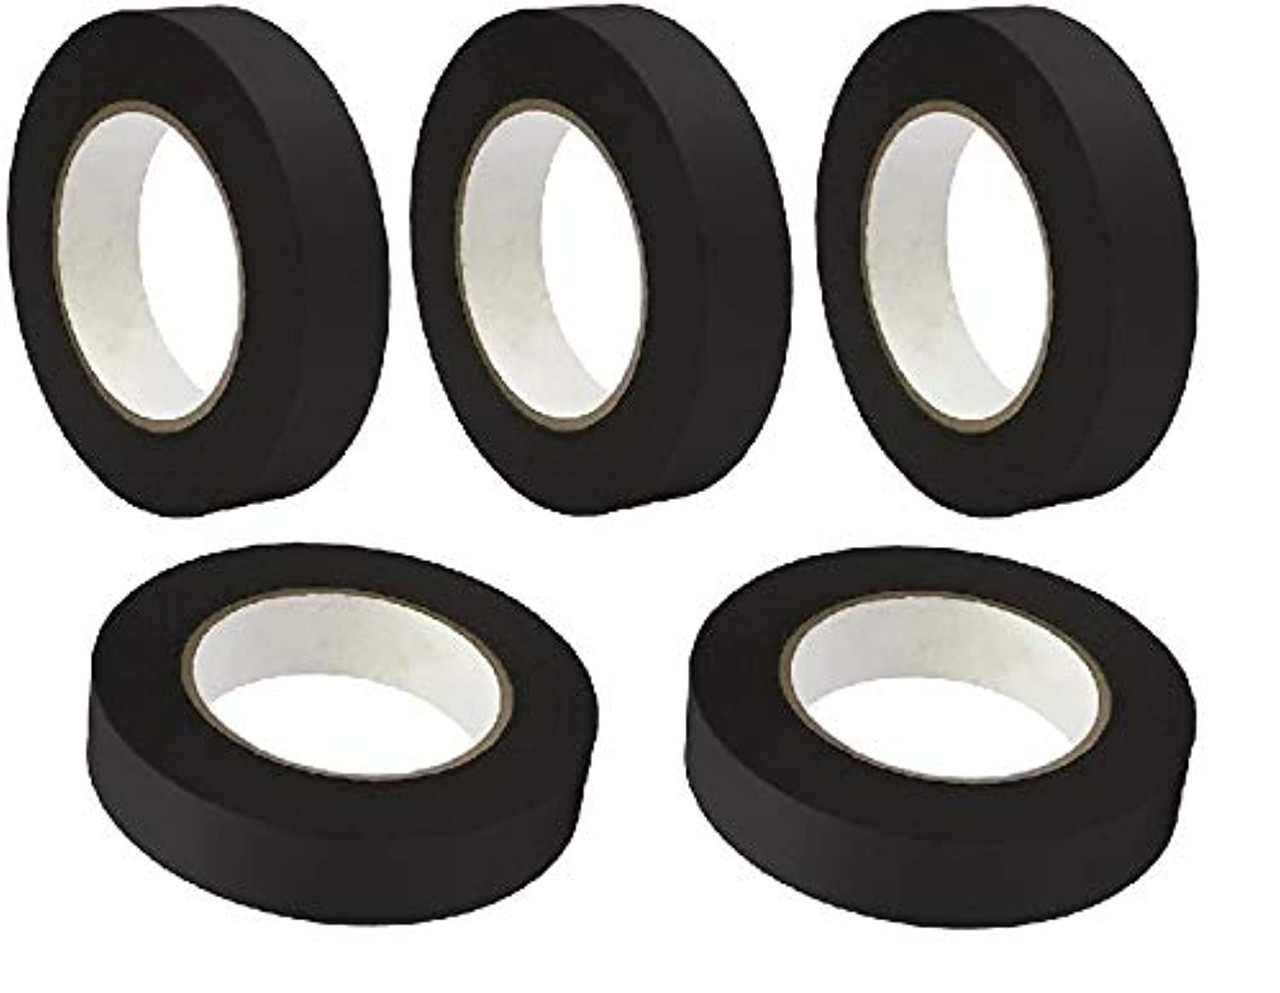 5 Rolls Marcy No Residue Black Masking Tape 1.5" x 60 yds (36mm x 180')